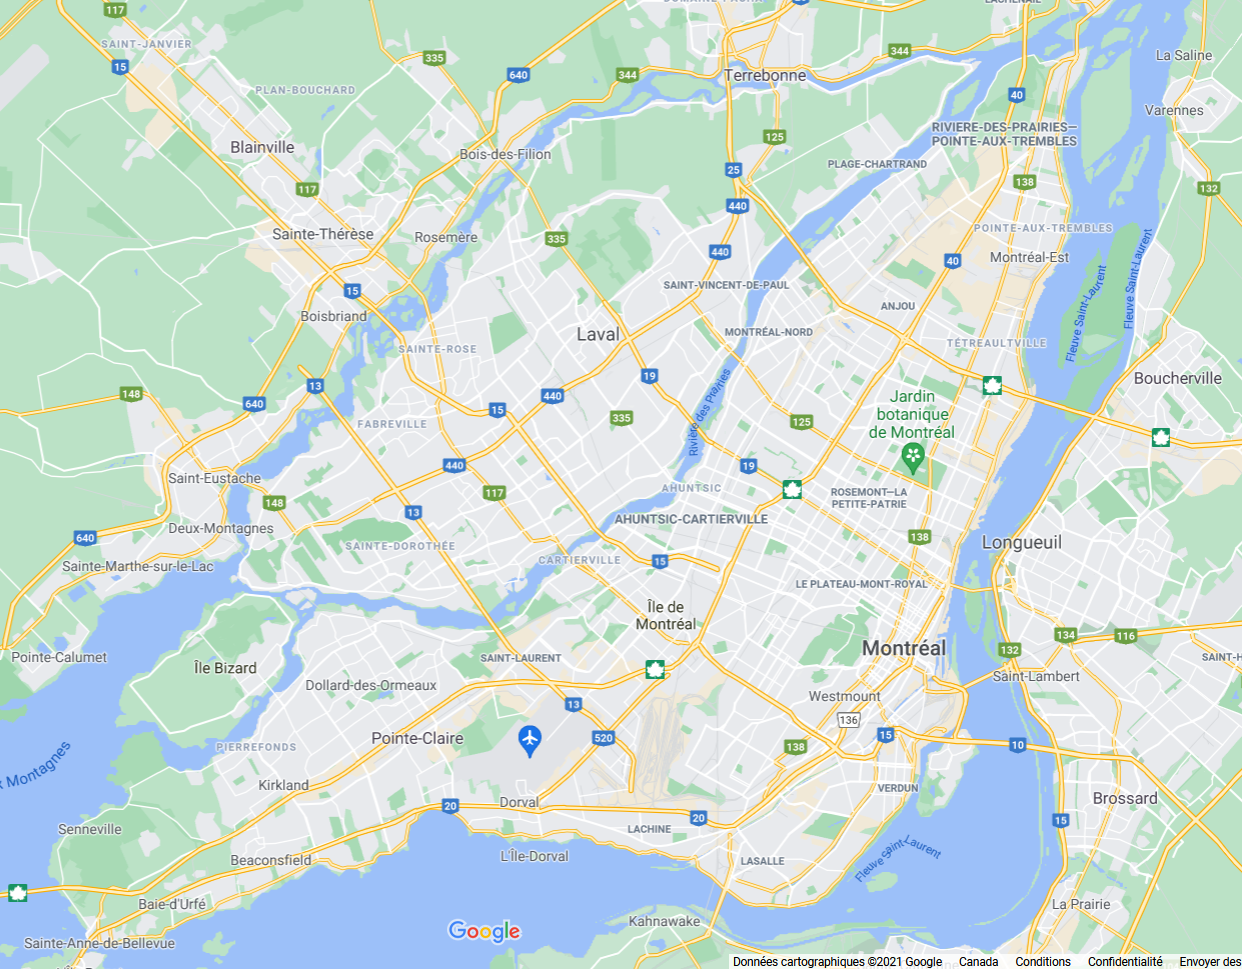 Montreal Host City